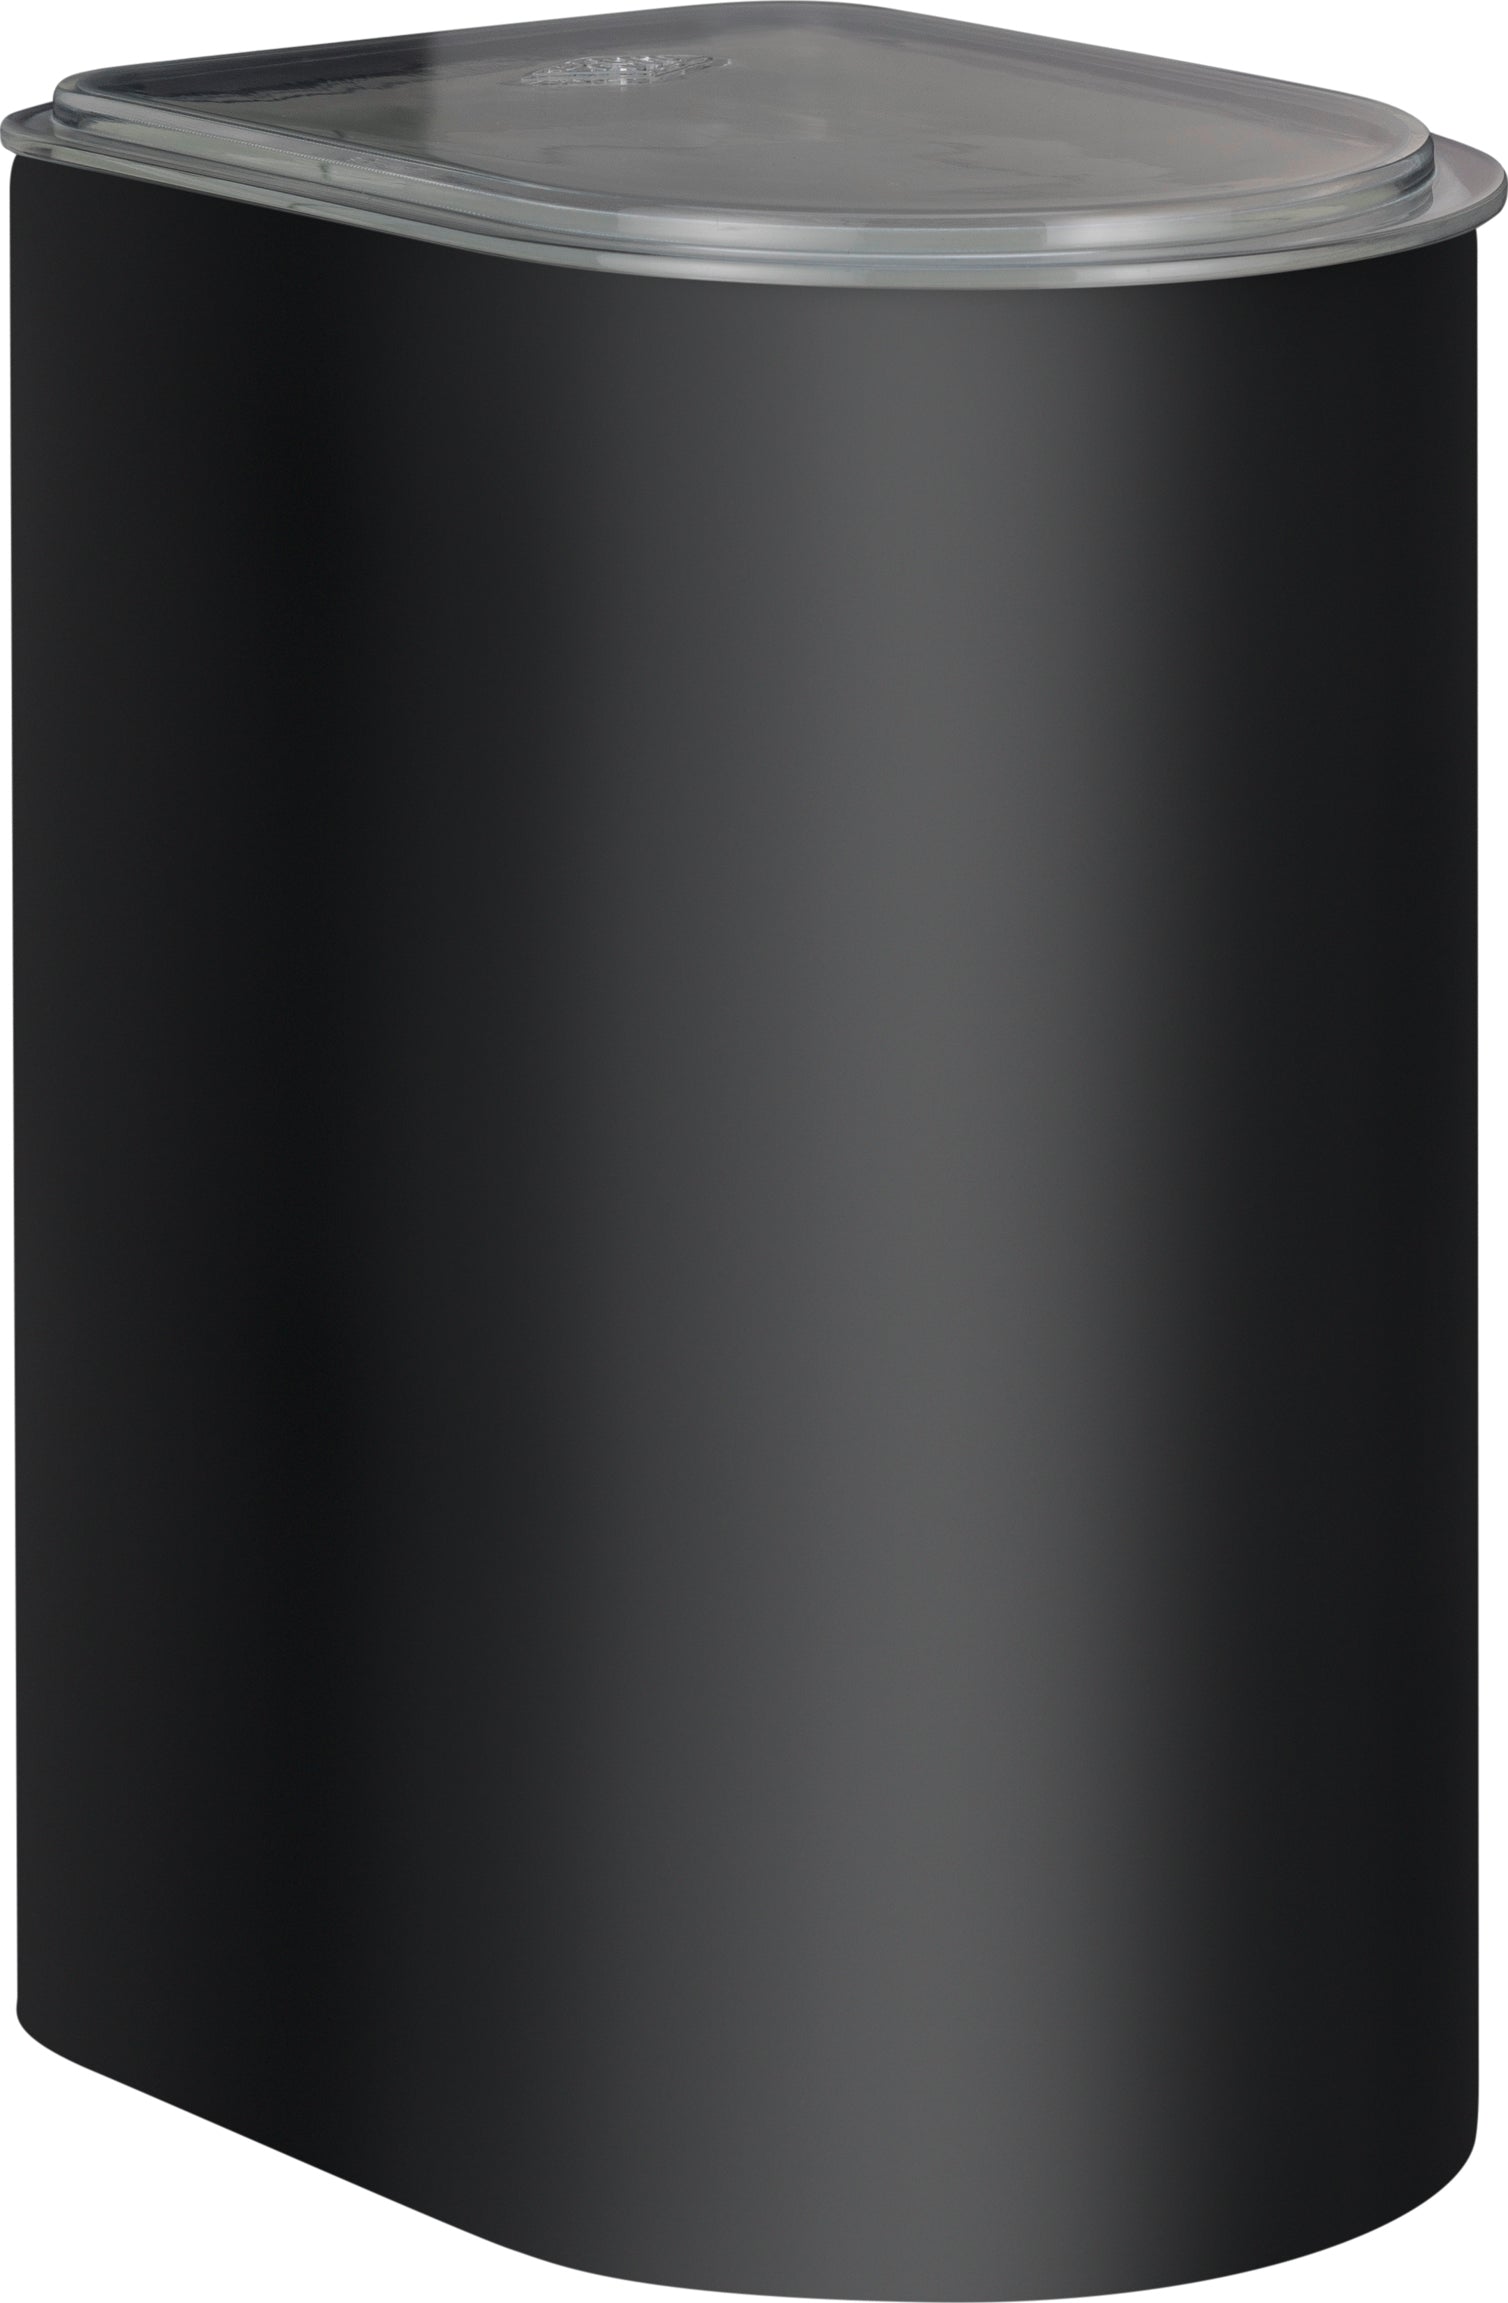 Wesco Kanister 3 litraa akryylikansi, musta matta